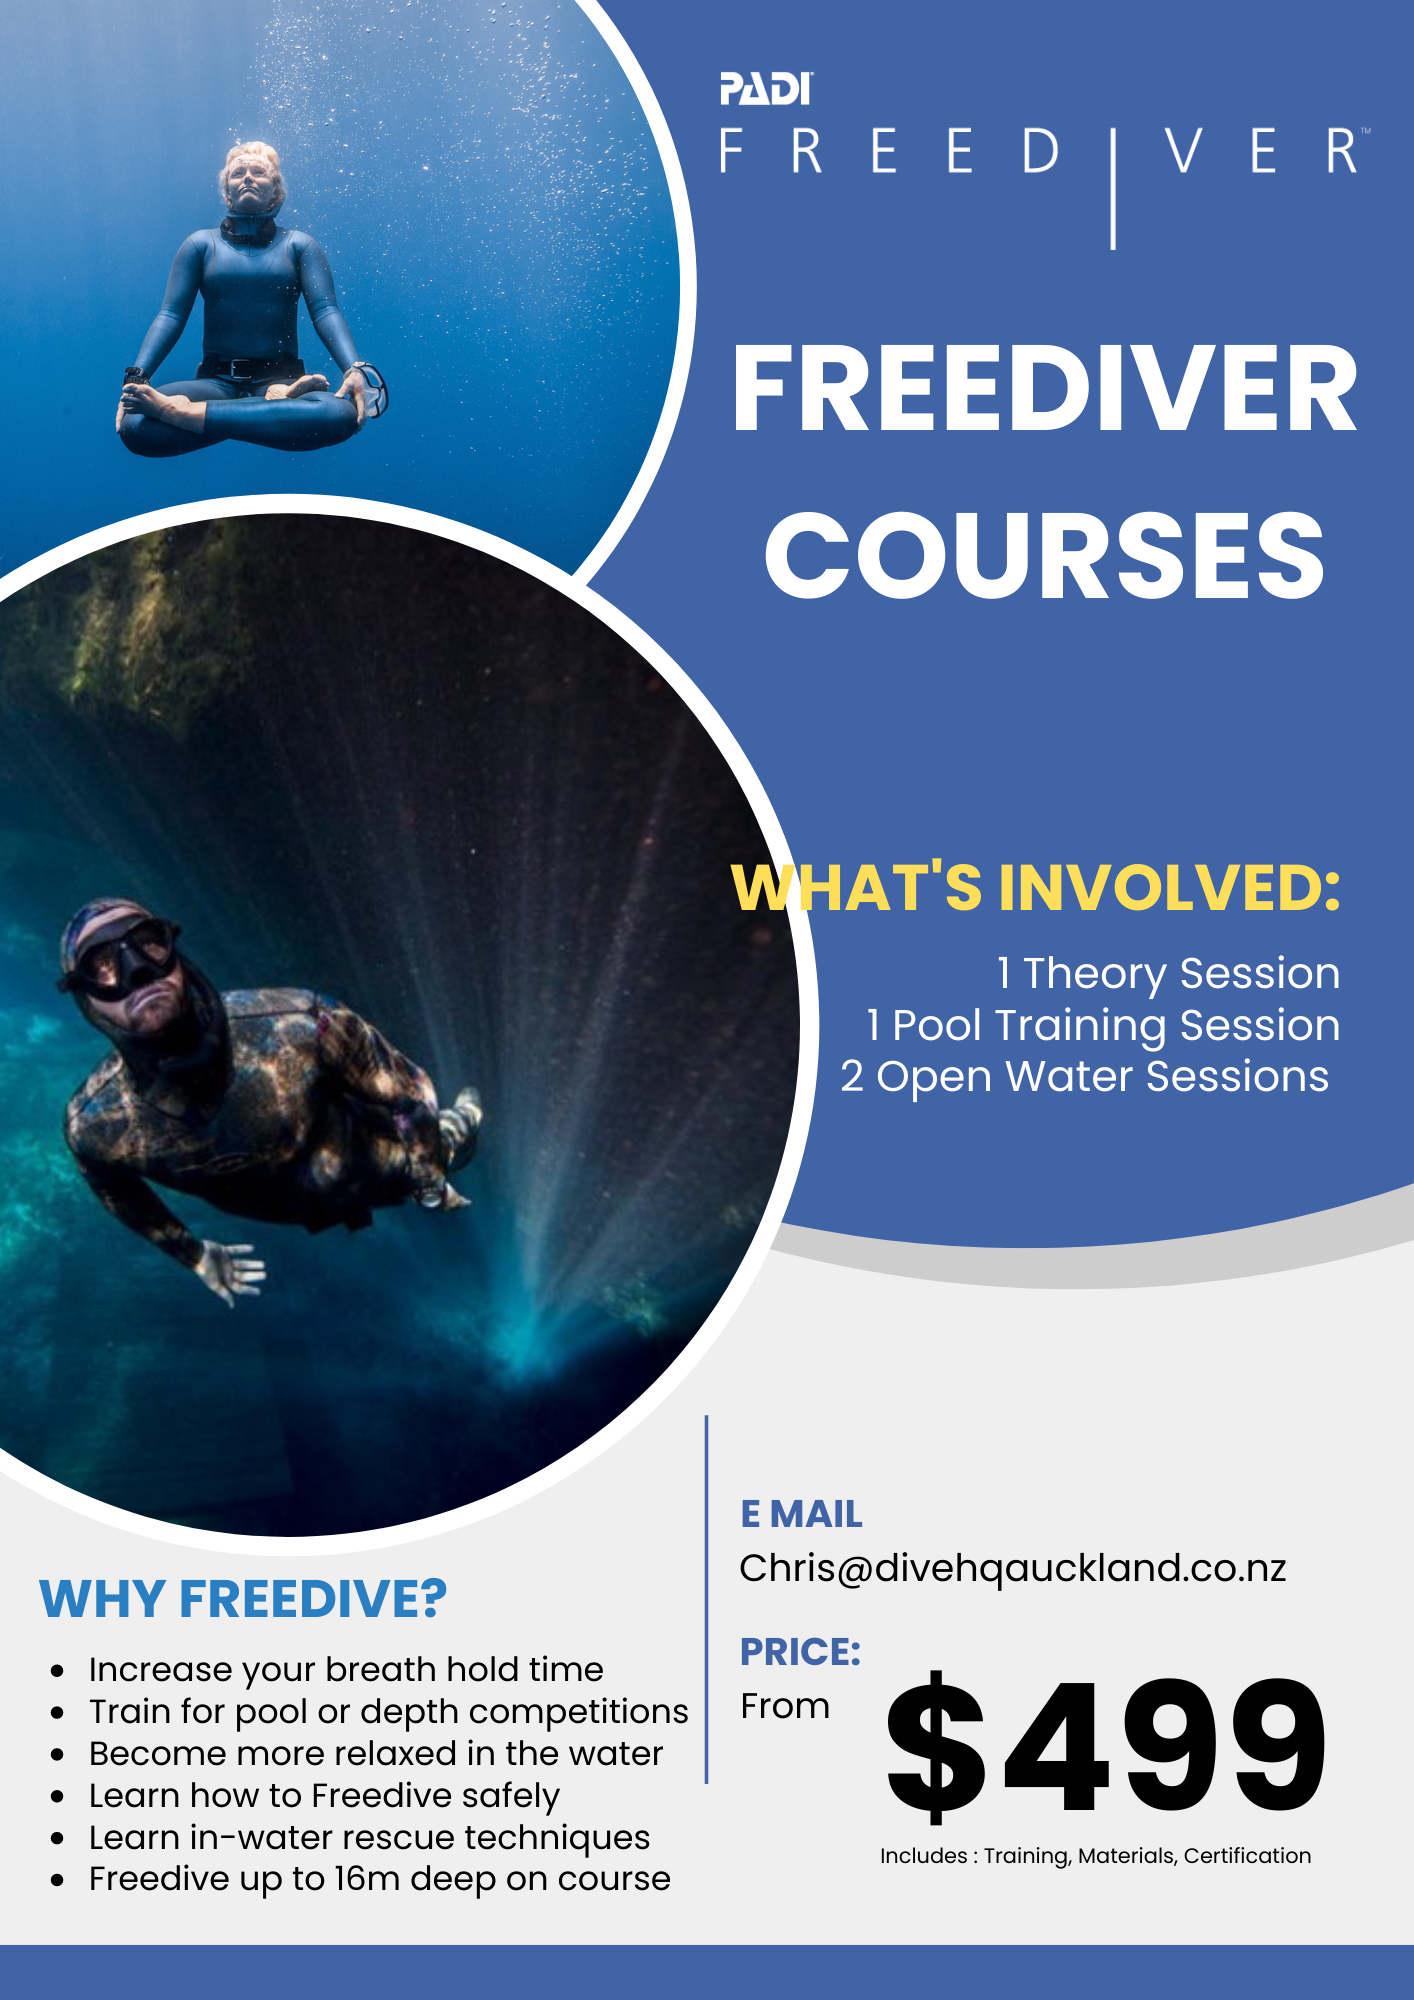 PADI Free Diver Course